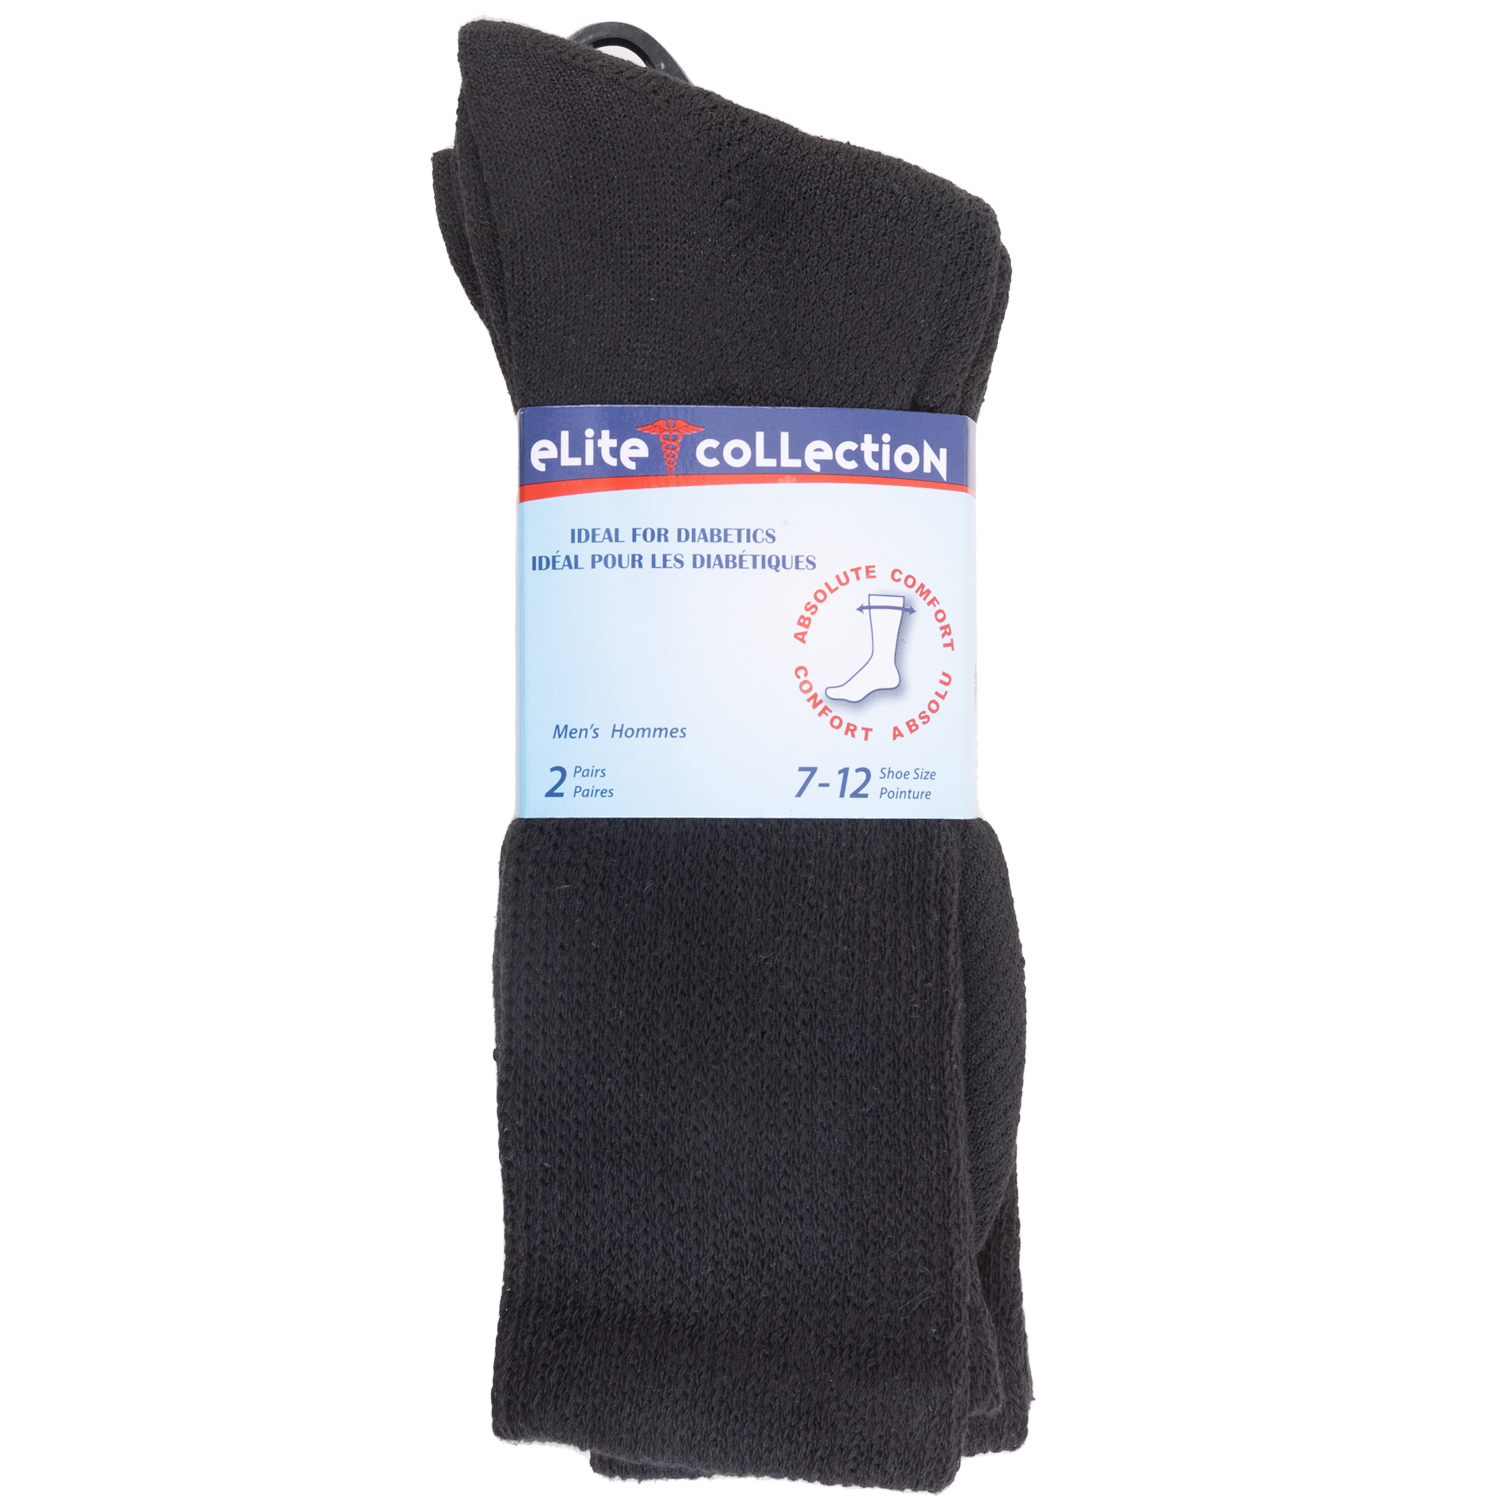 Elite Collection - Non-binding socks, 2 pairs